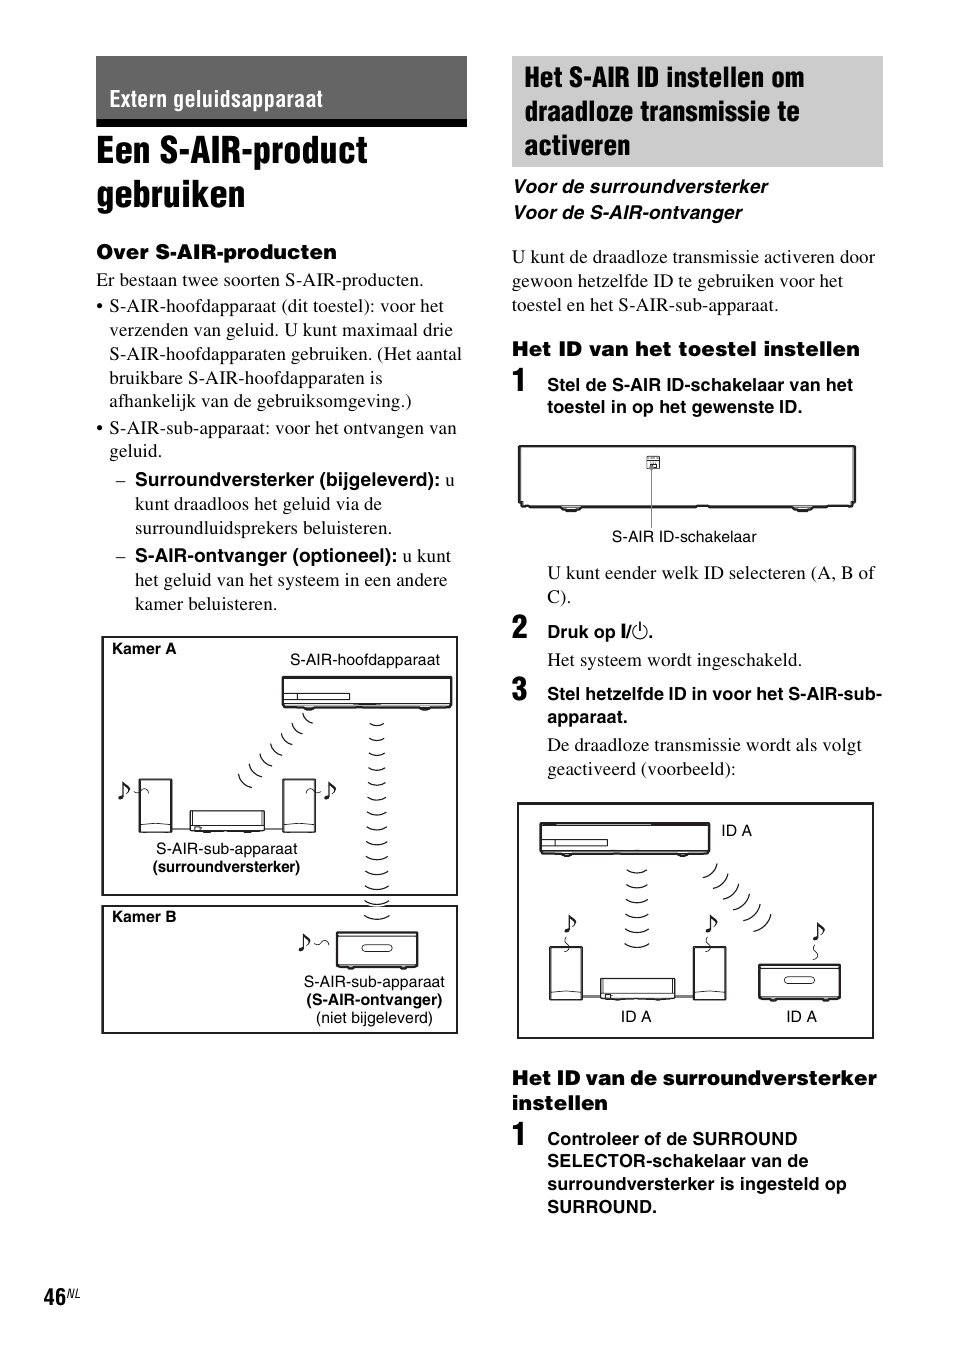 Extern geluidsapparaat, Een s-air-product gebruiken | Sony BDV-IZ1000W Manual del usuario | Página 46 / 371